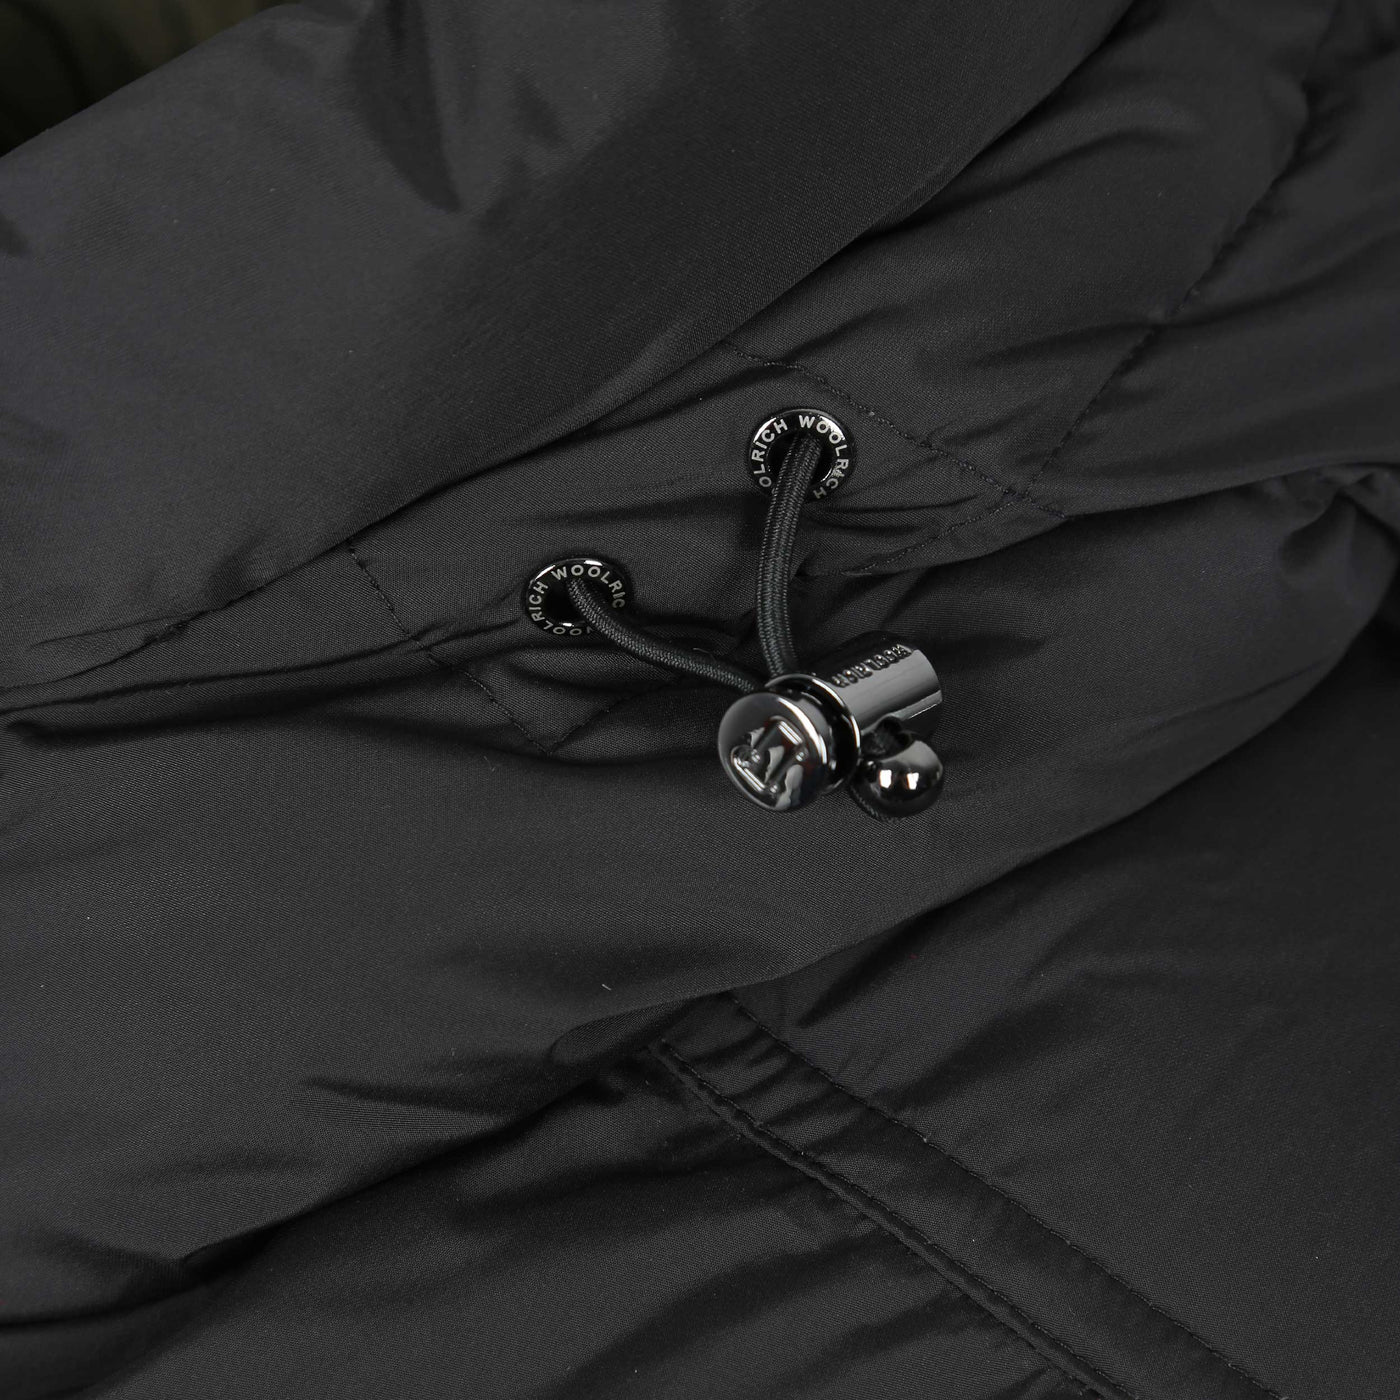 Woolrich Premium Down Jacket in Black Drawstring